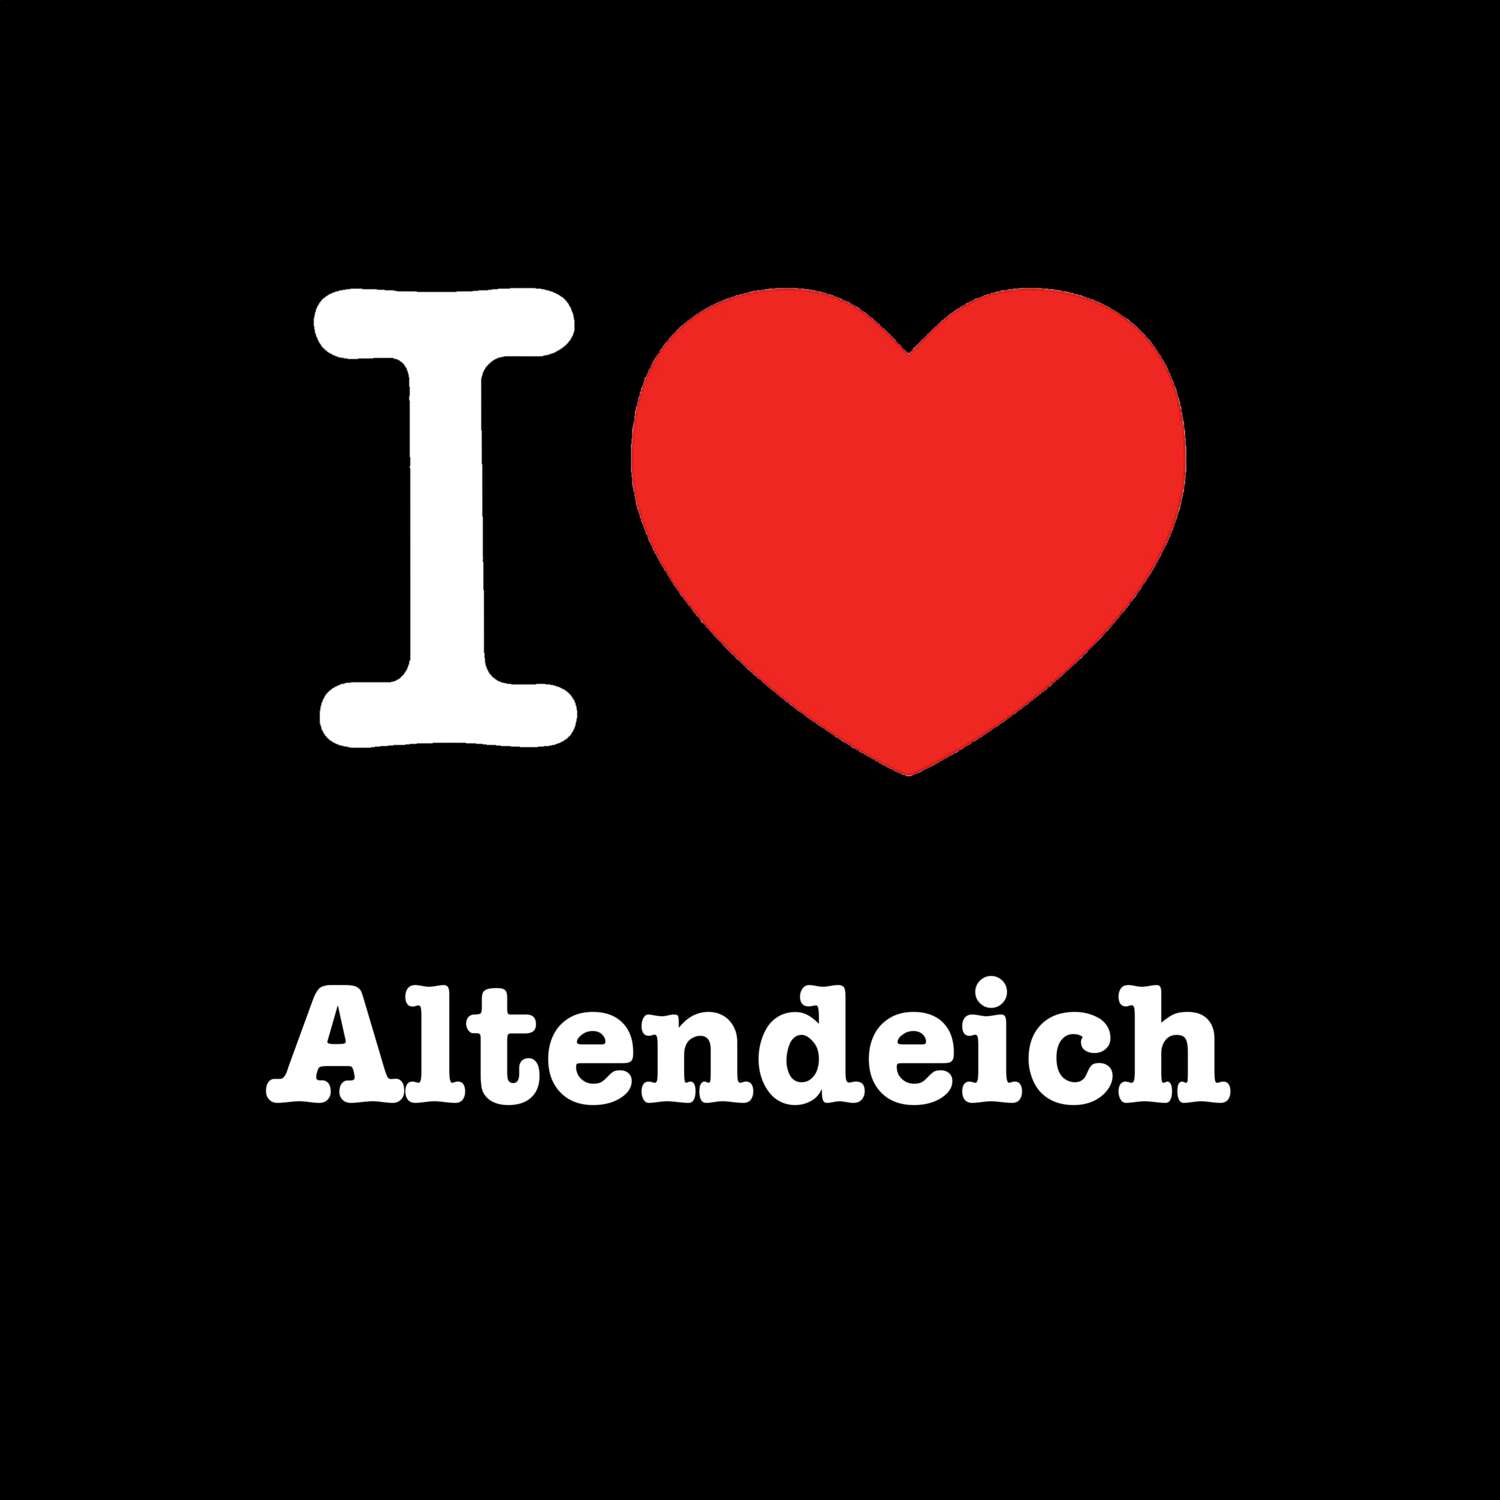 Altendeich T-Shirt »I love«